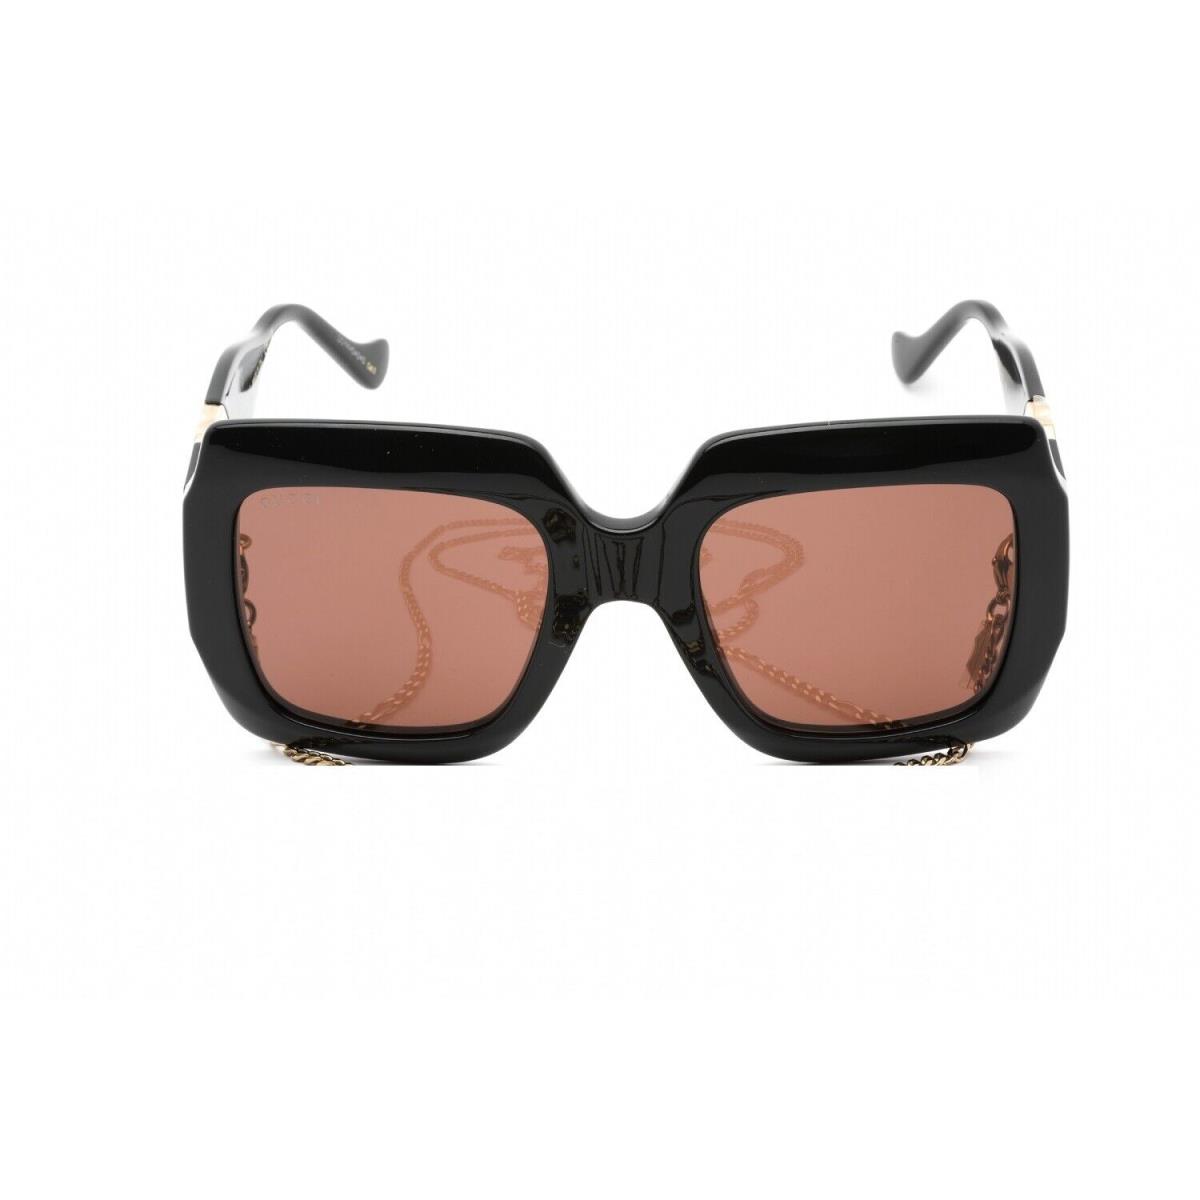 Gucci GG1022S-005-54 Sunglasses Size 54mm 140mm 23mm Black Women